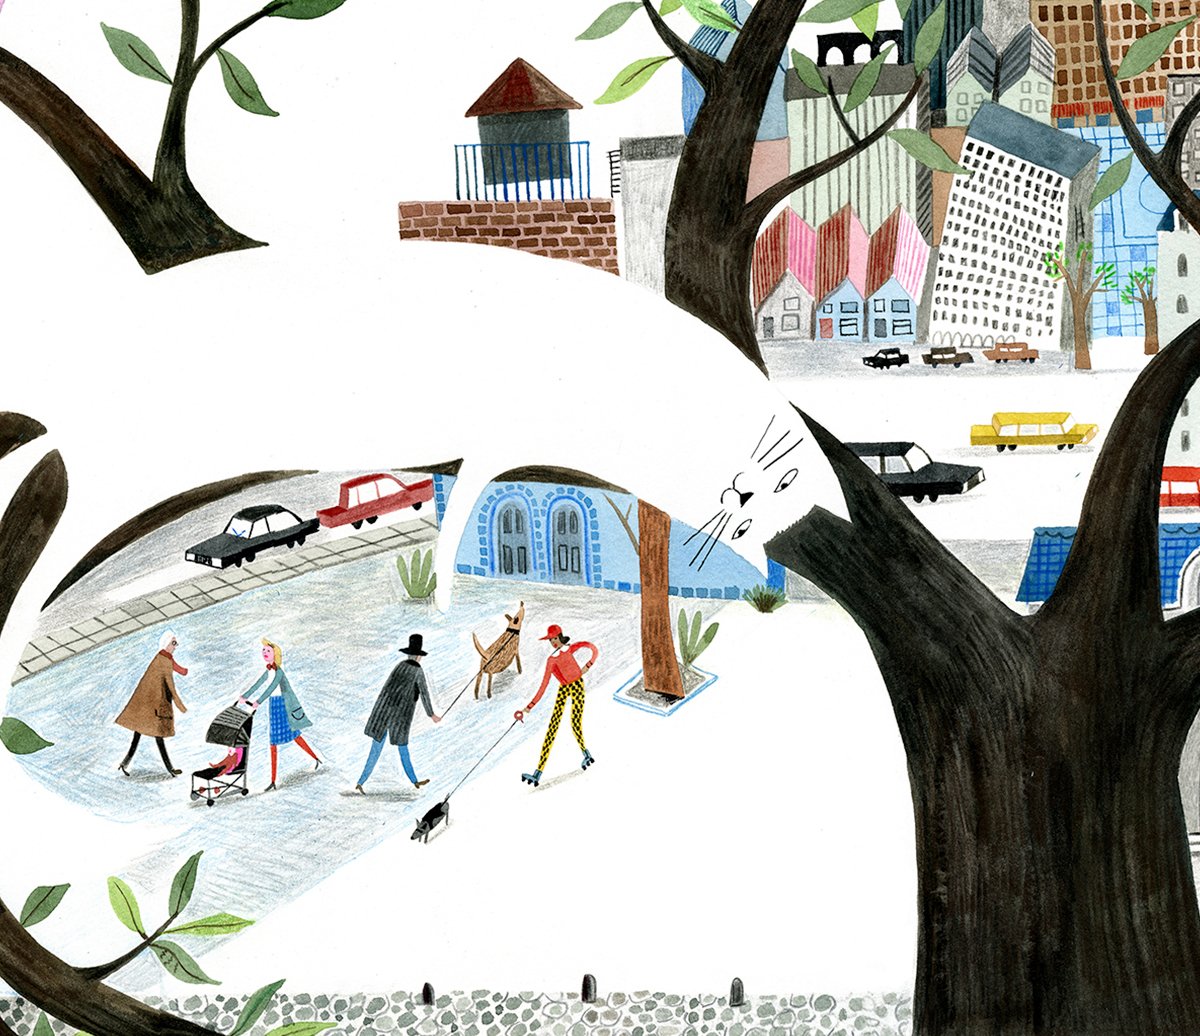 lydia-corry-cat-in-tree-illustration.jpg